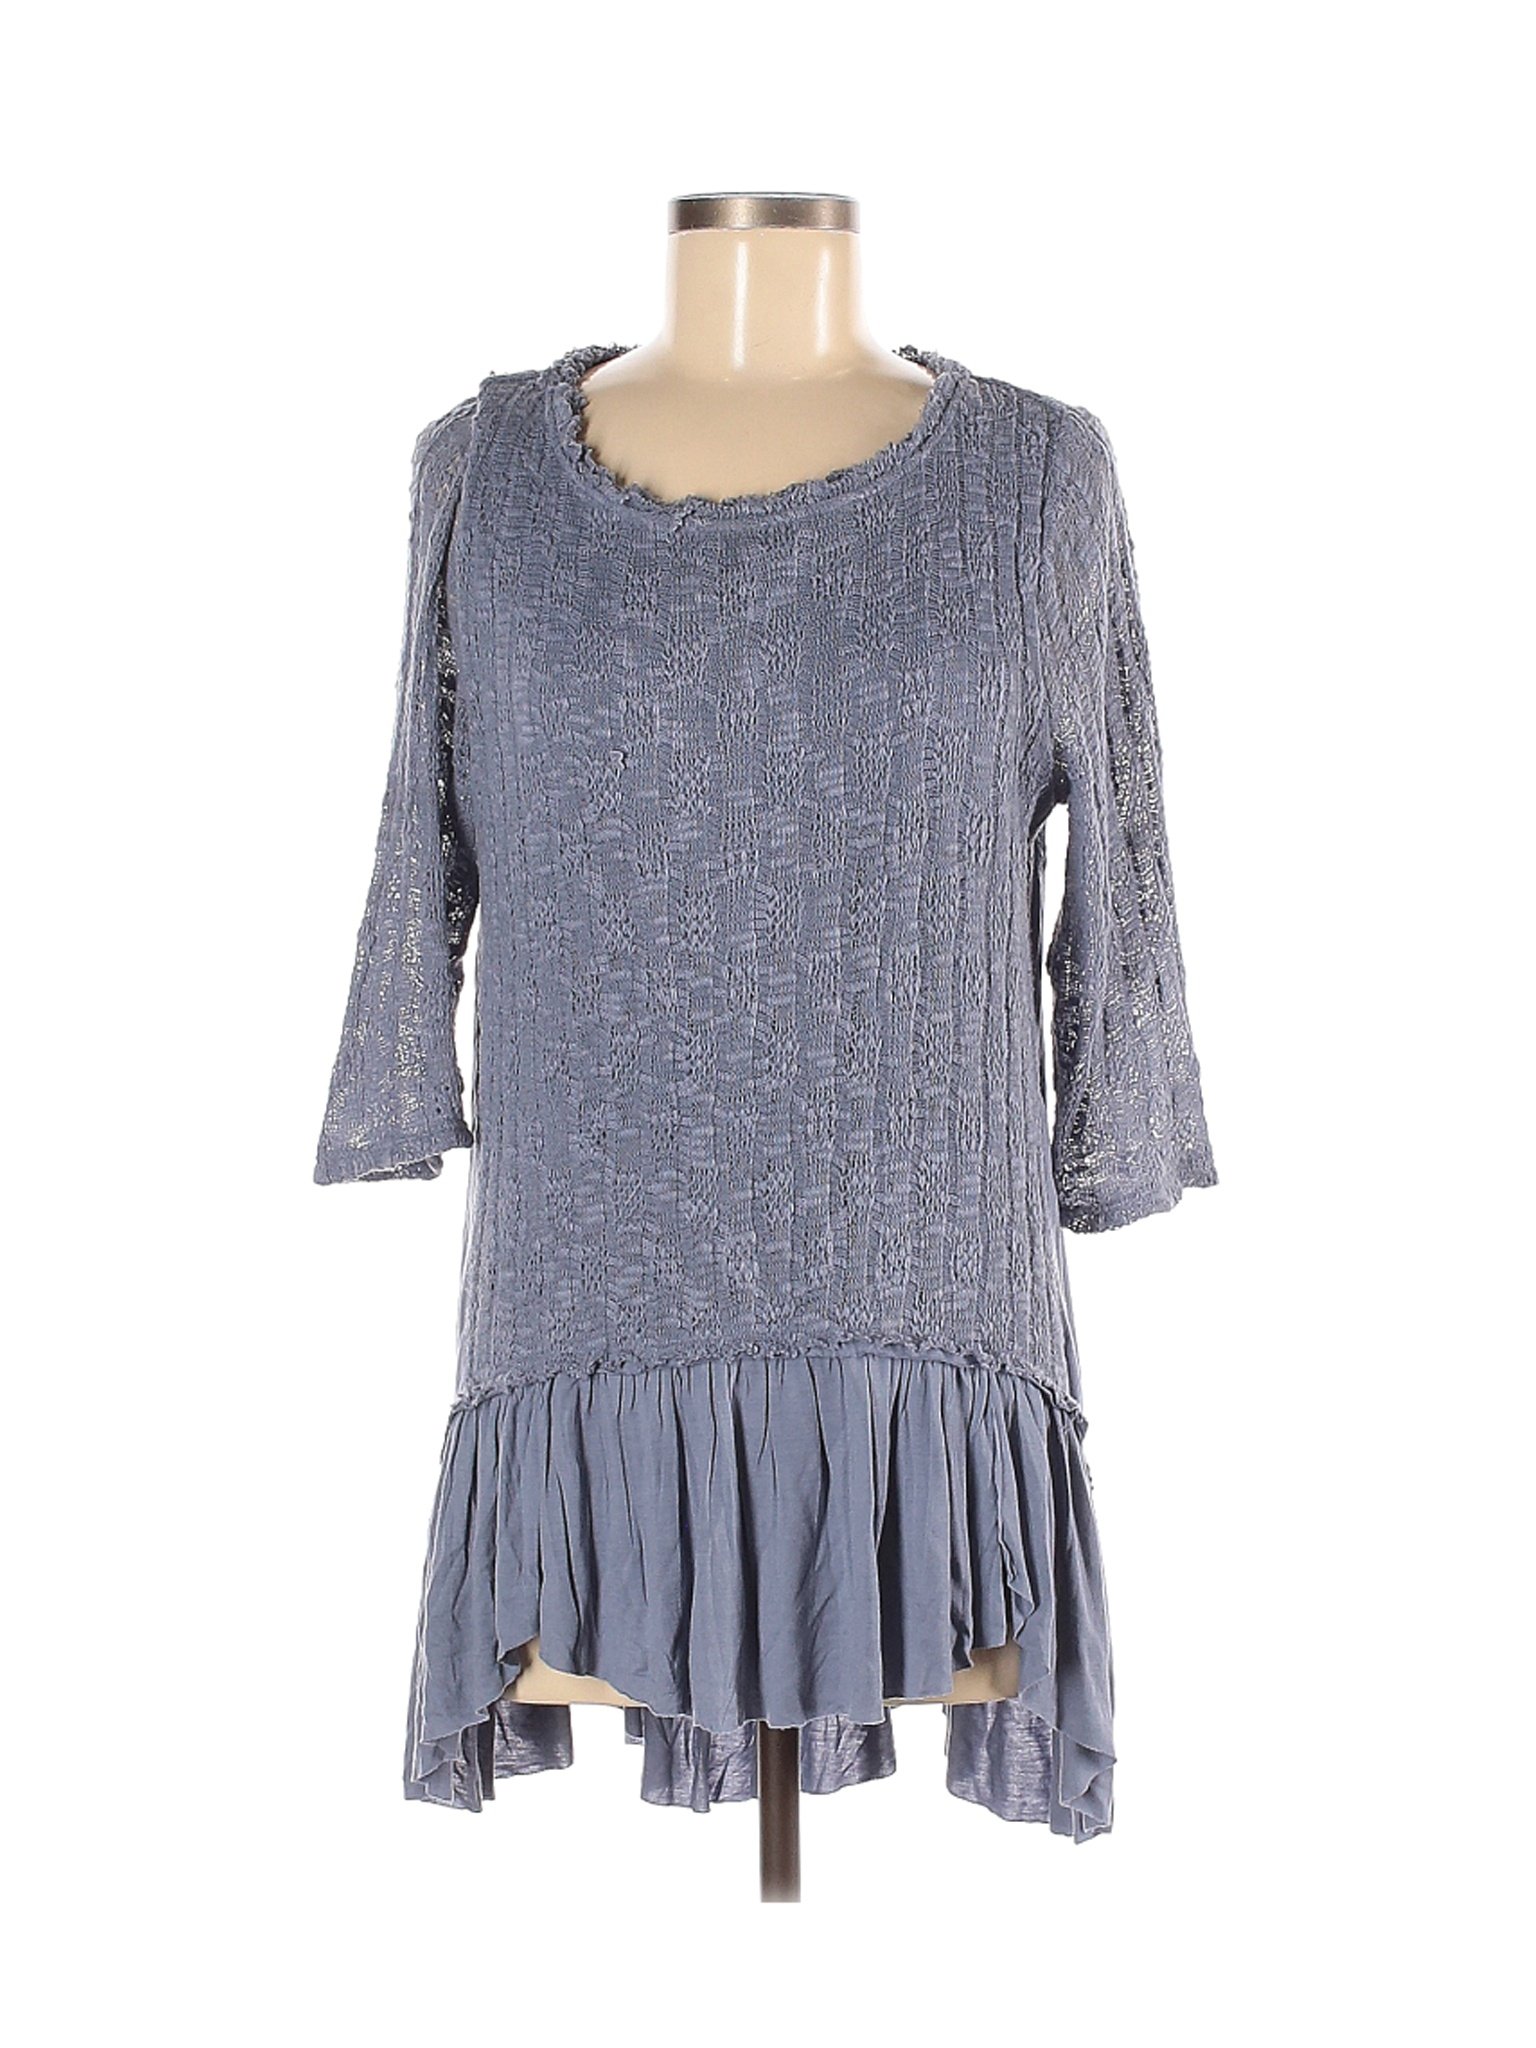 Indigo Thread Co. Women Blue 3/4 Sleeve Top M | eBay